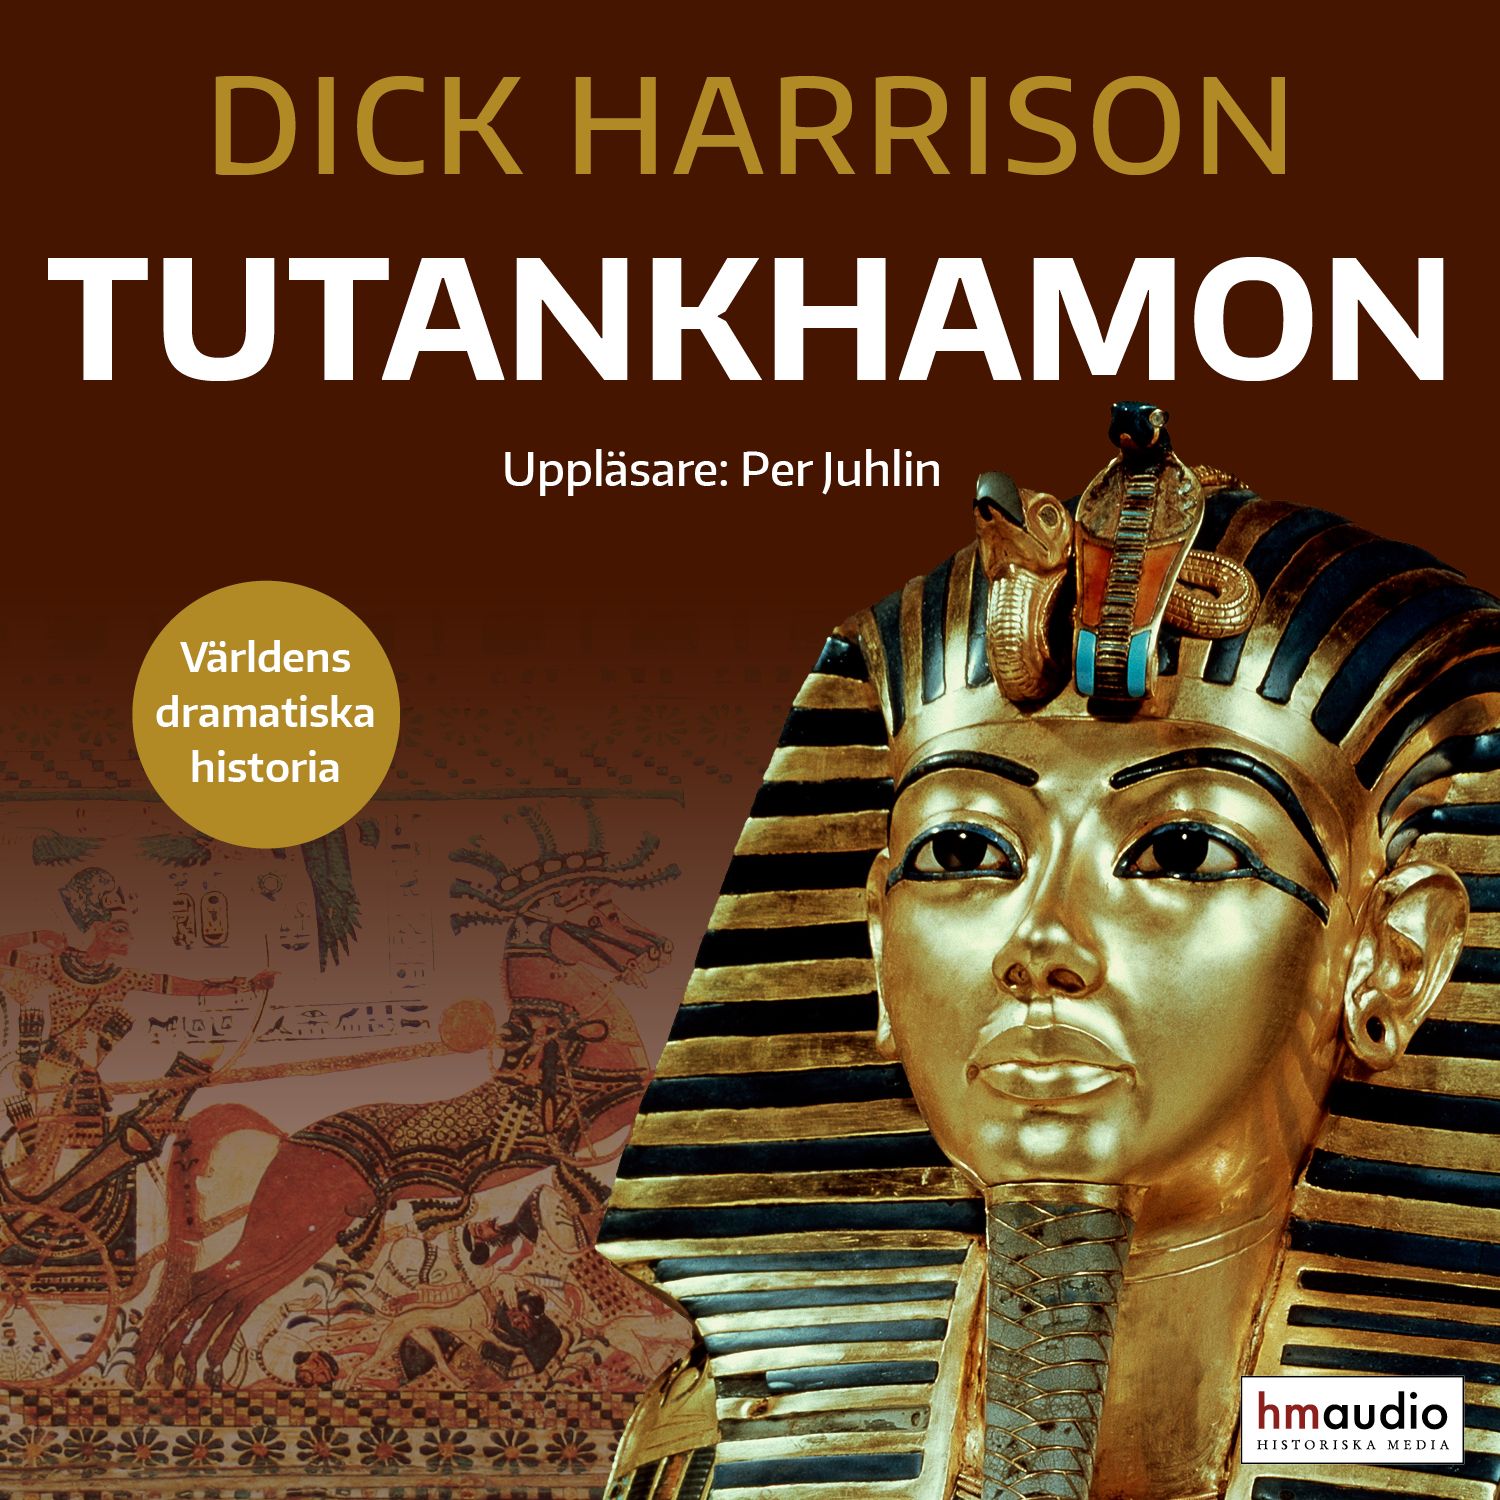 Tutankhamon, ljudbok av Dick Harrison